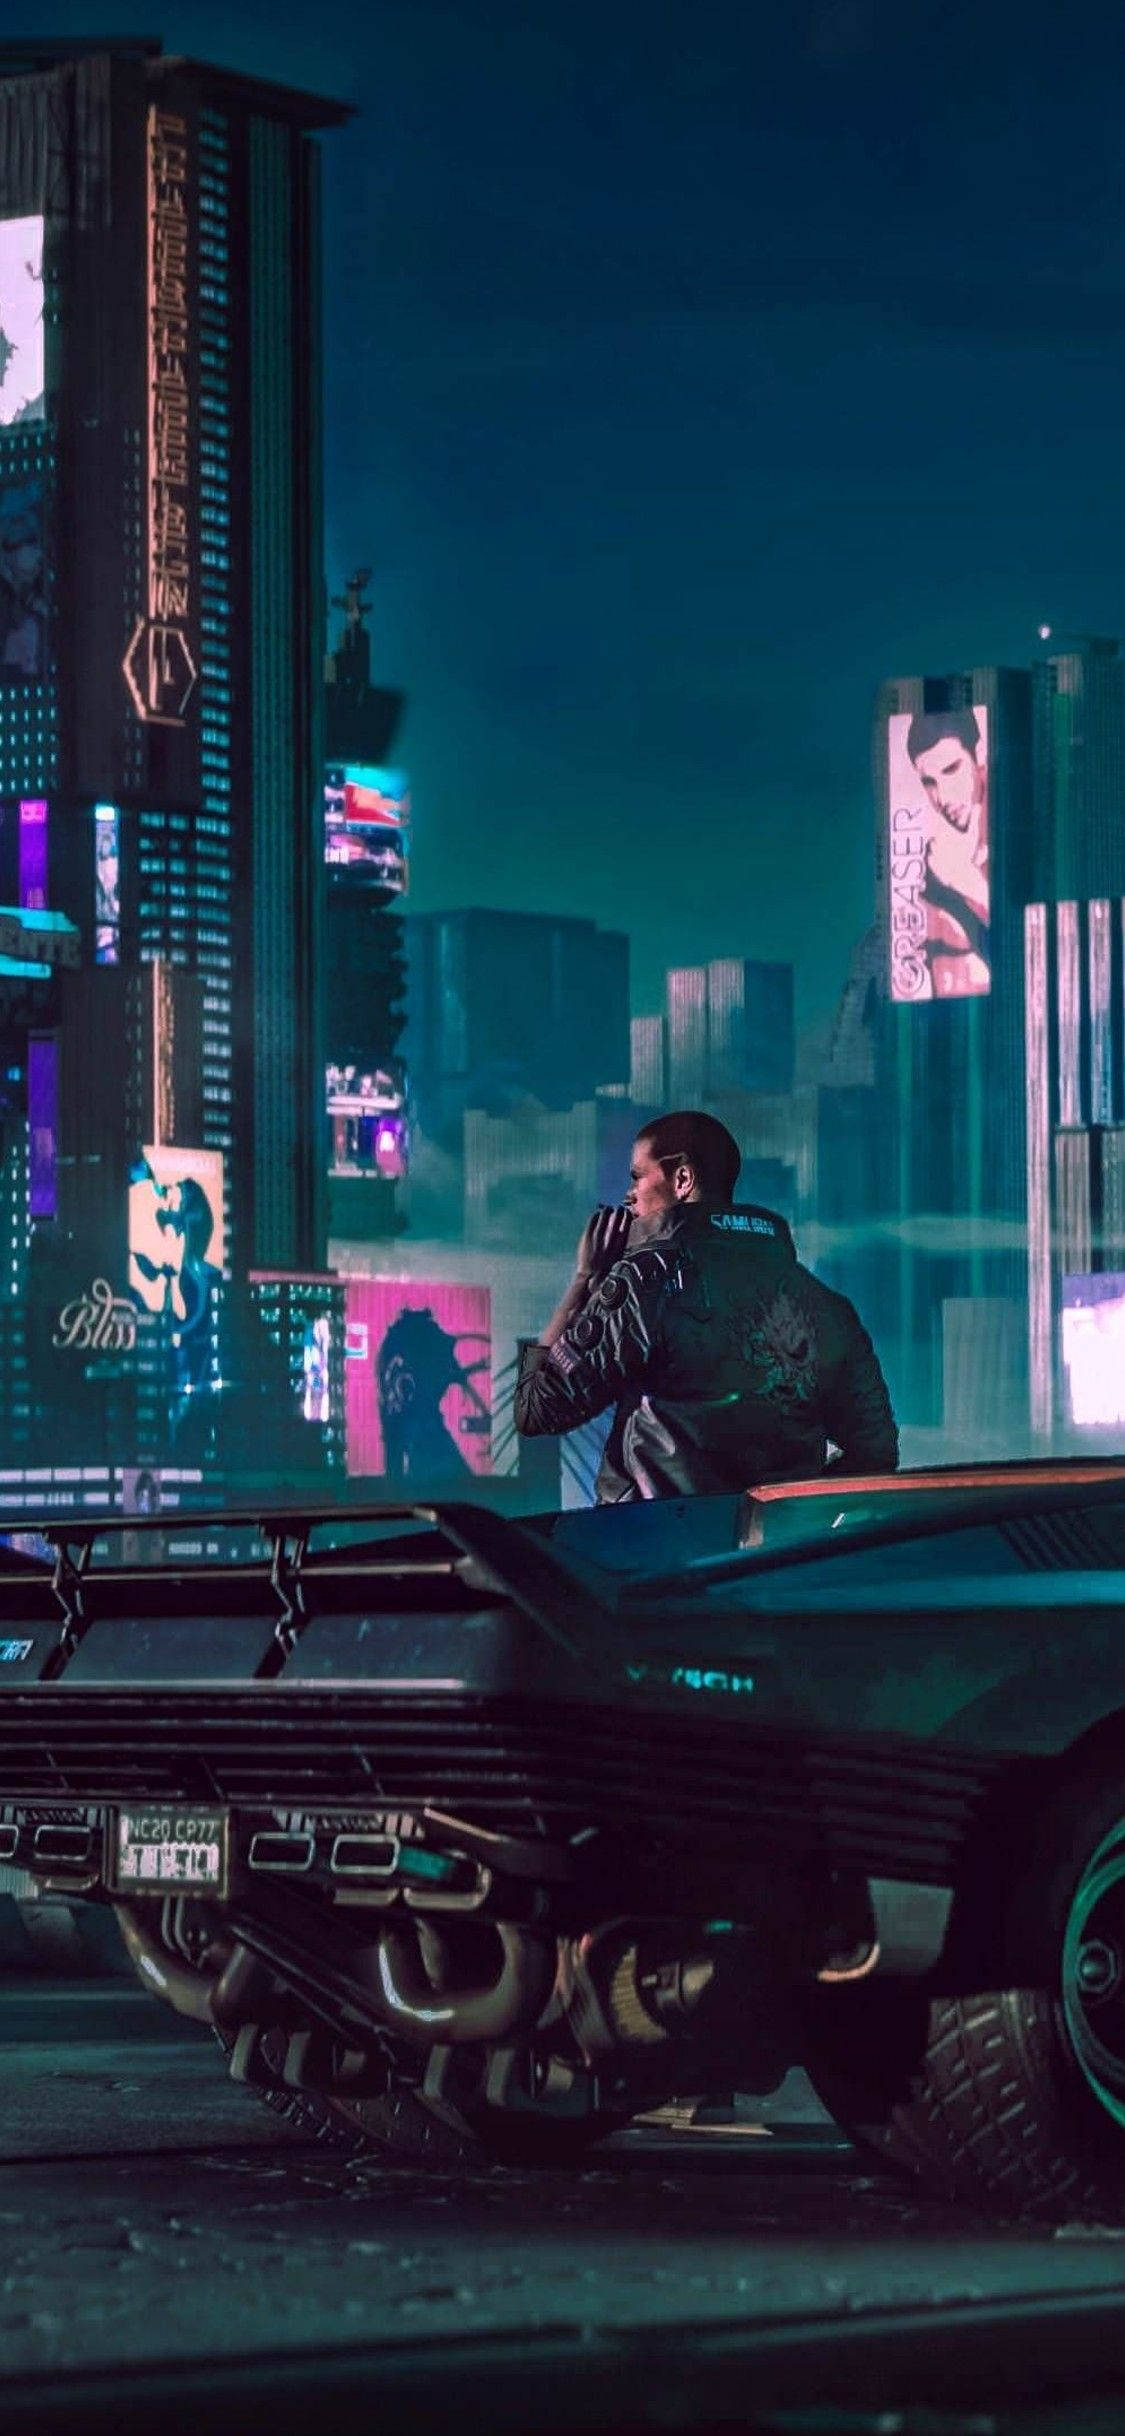 Caption: Futuristic Cyberpunk Car On The Streets Of Neon City Wallpaper